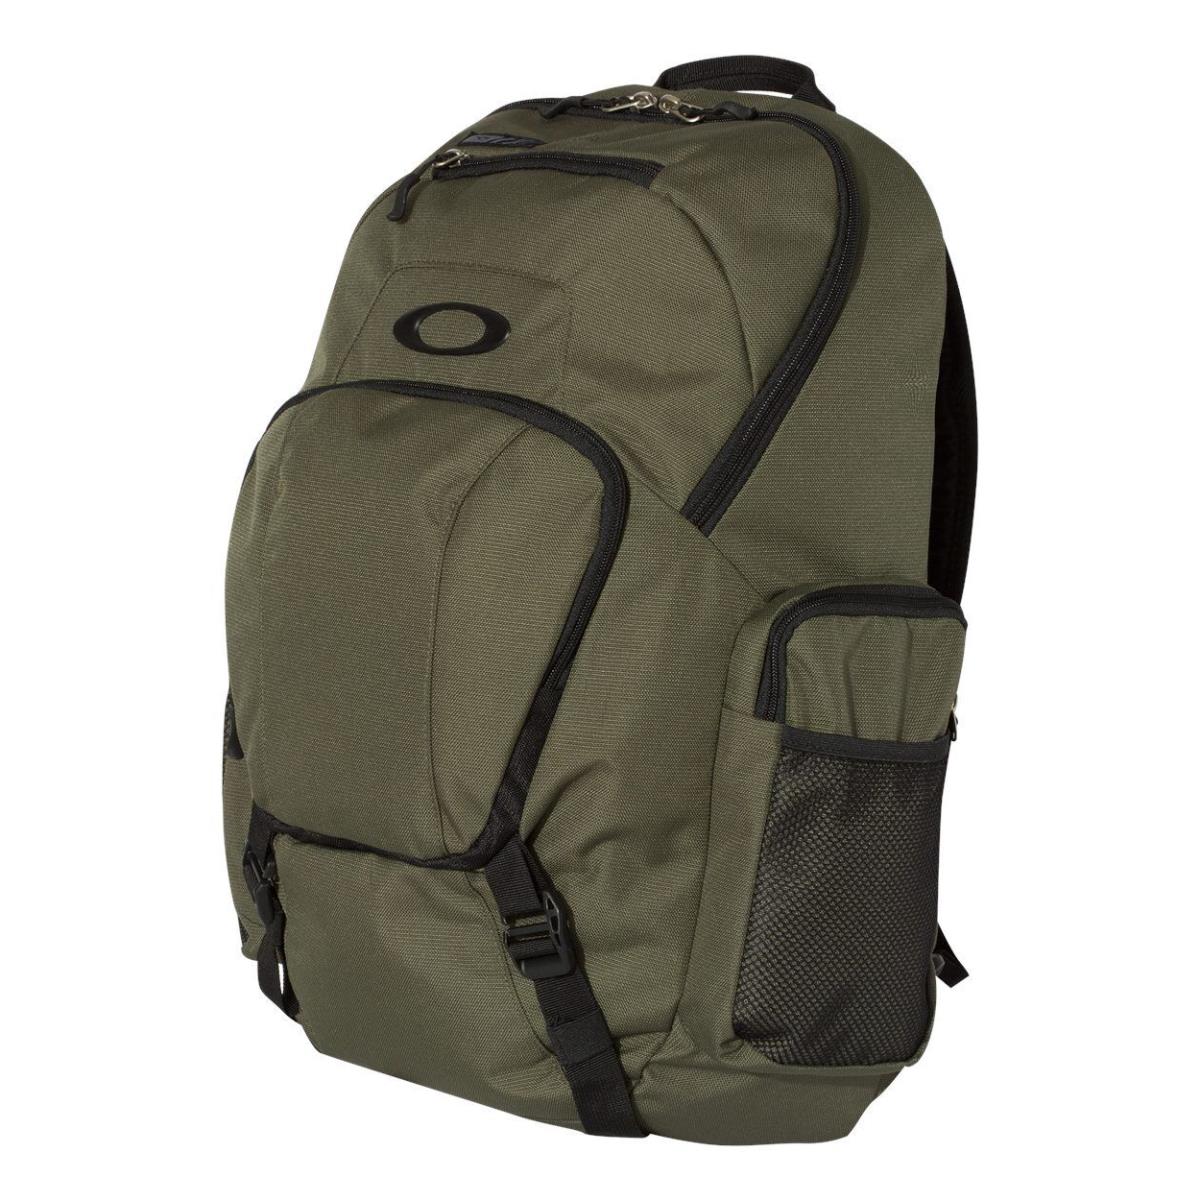 Oakley - 30L School Bag - Olive Granite Black Blade Backpack Dark Brush